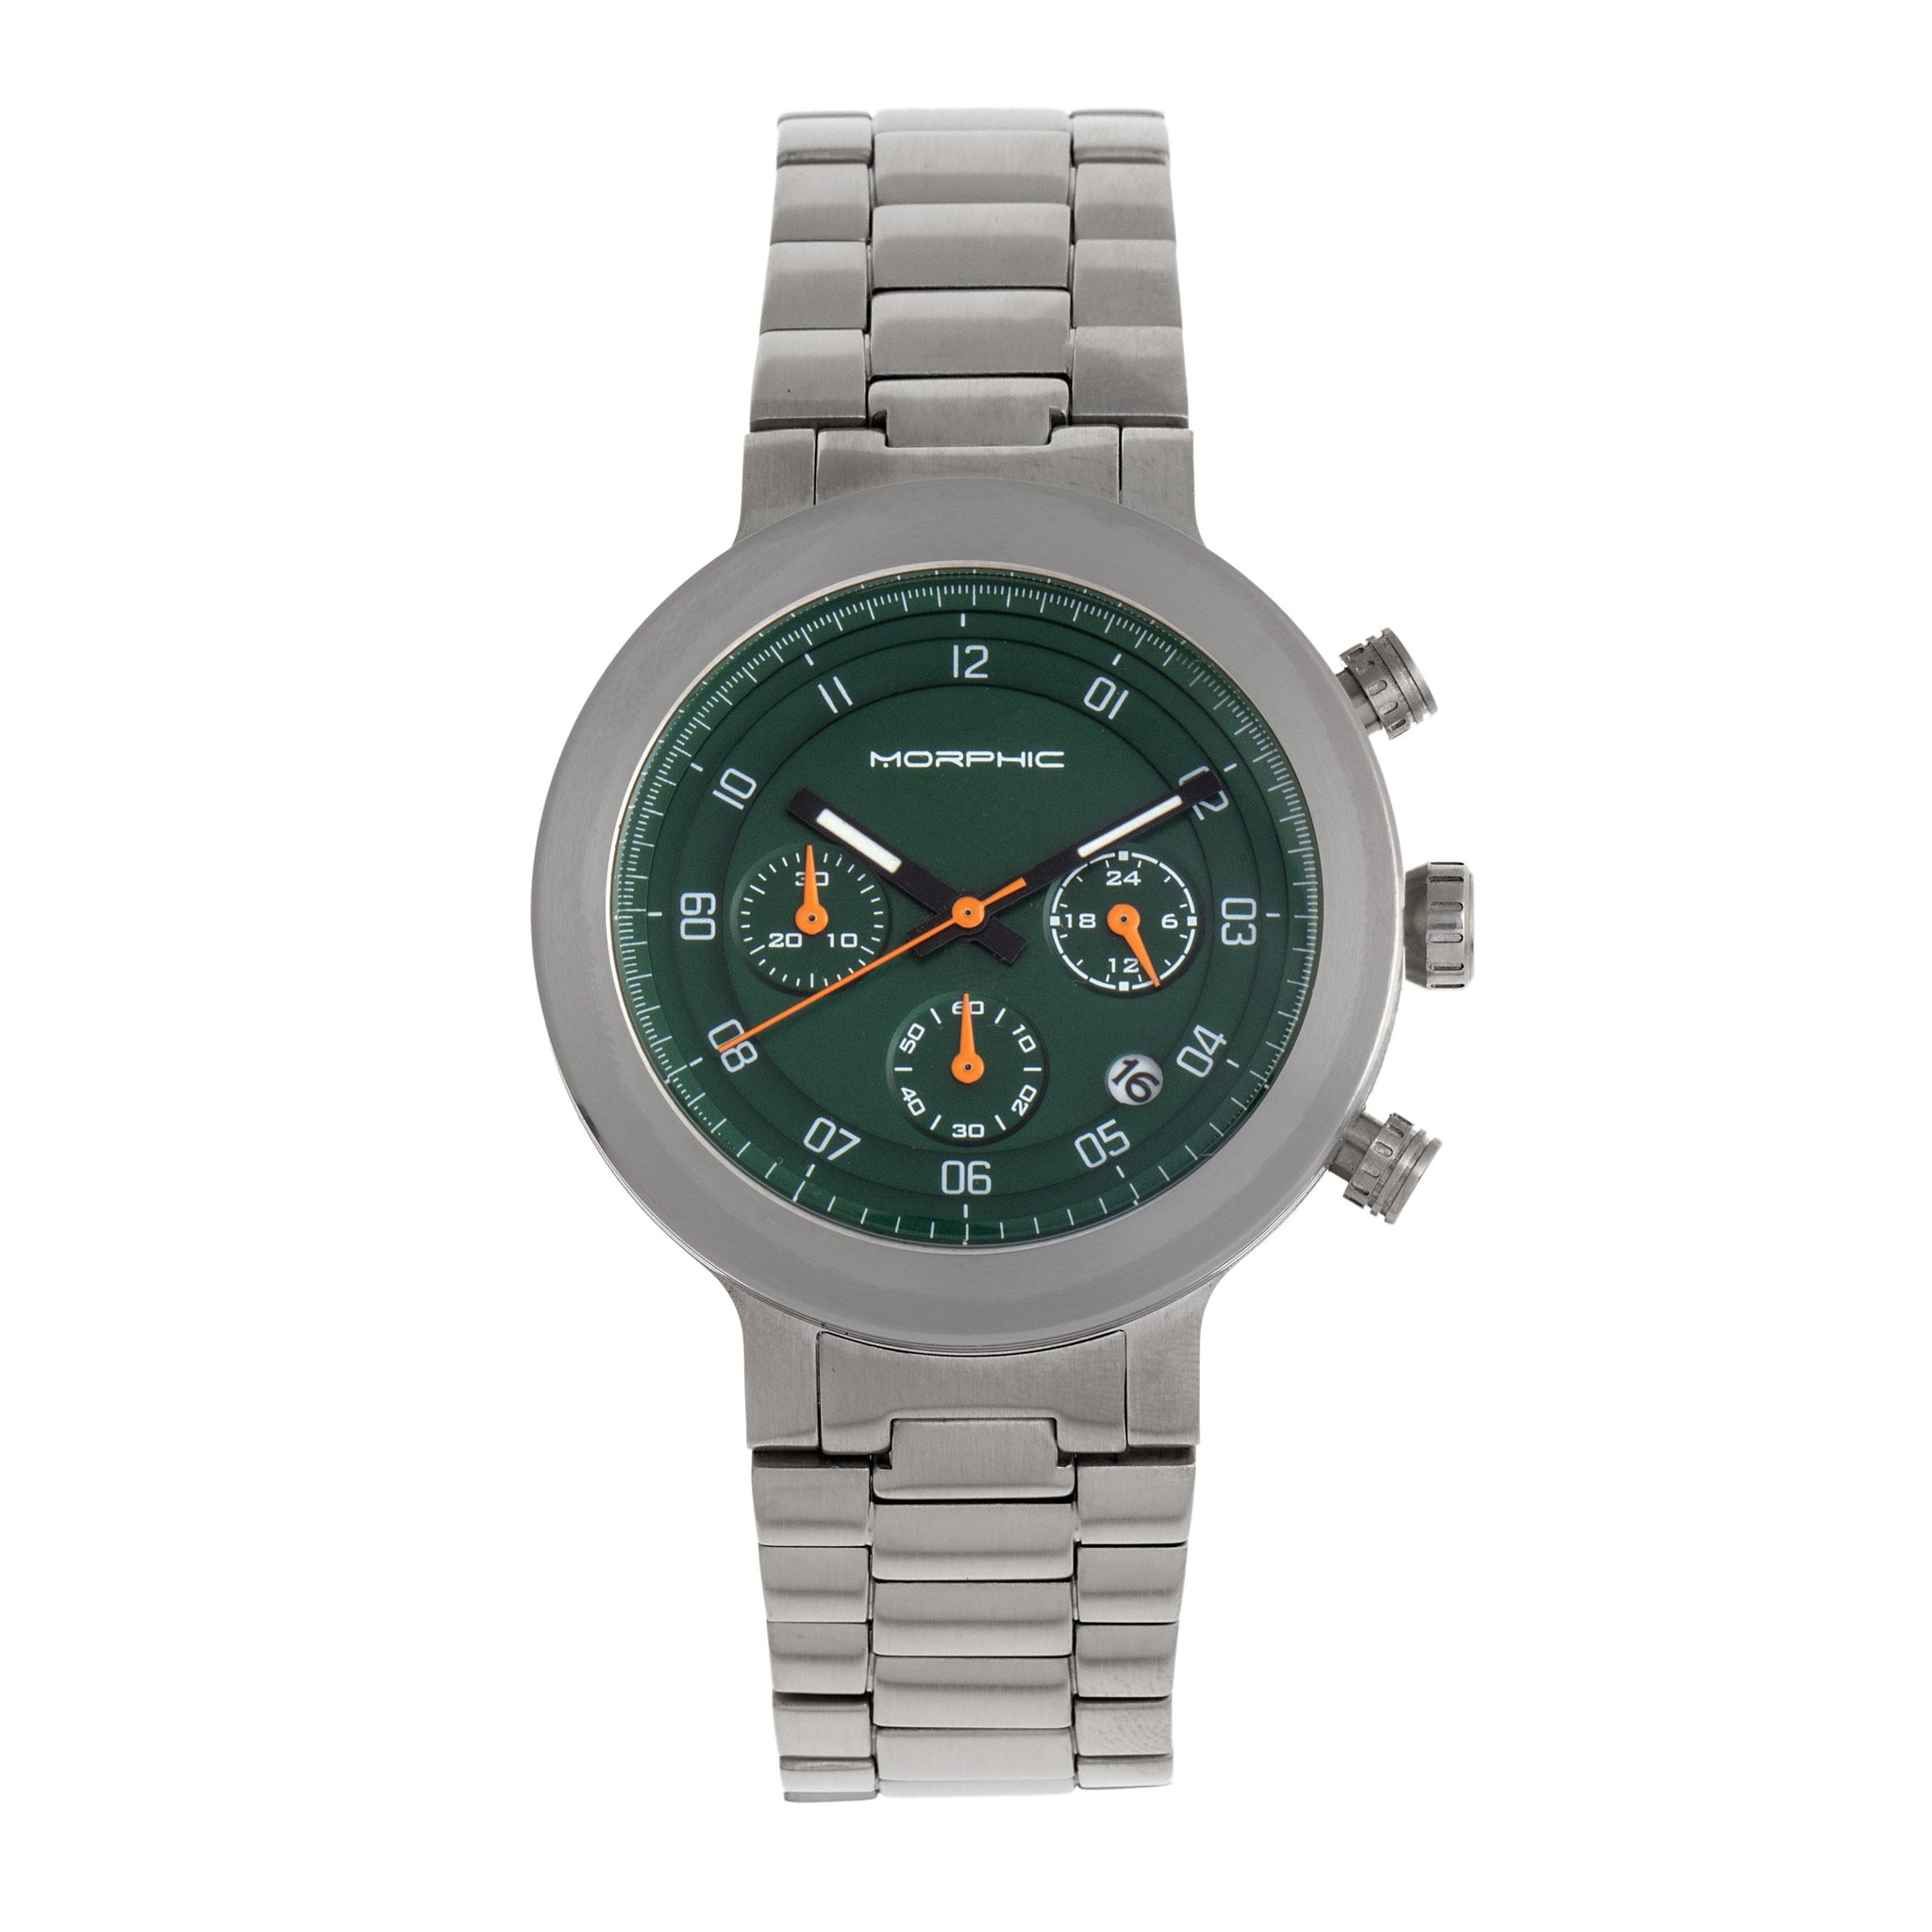 Morphic M78 Series Chronograph Bracelet Watch - Silver/Green - MPH7803